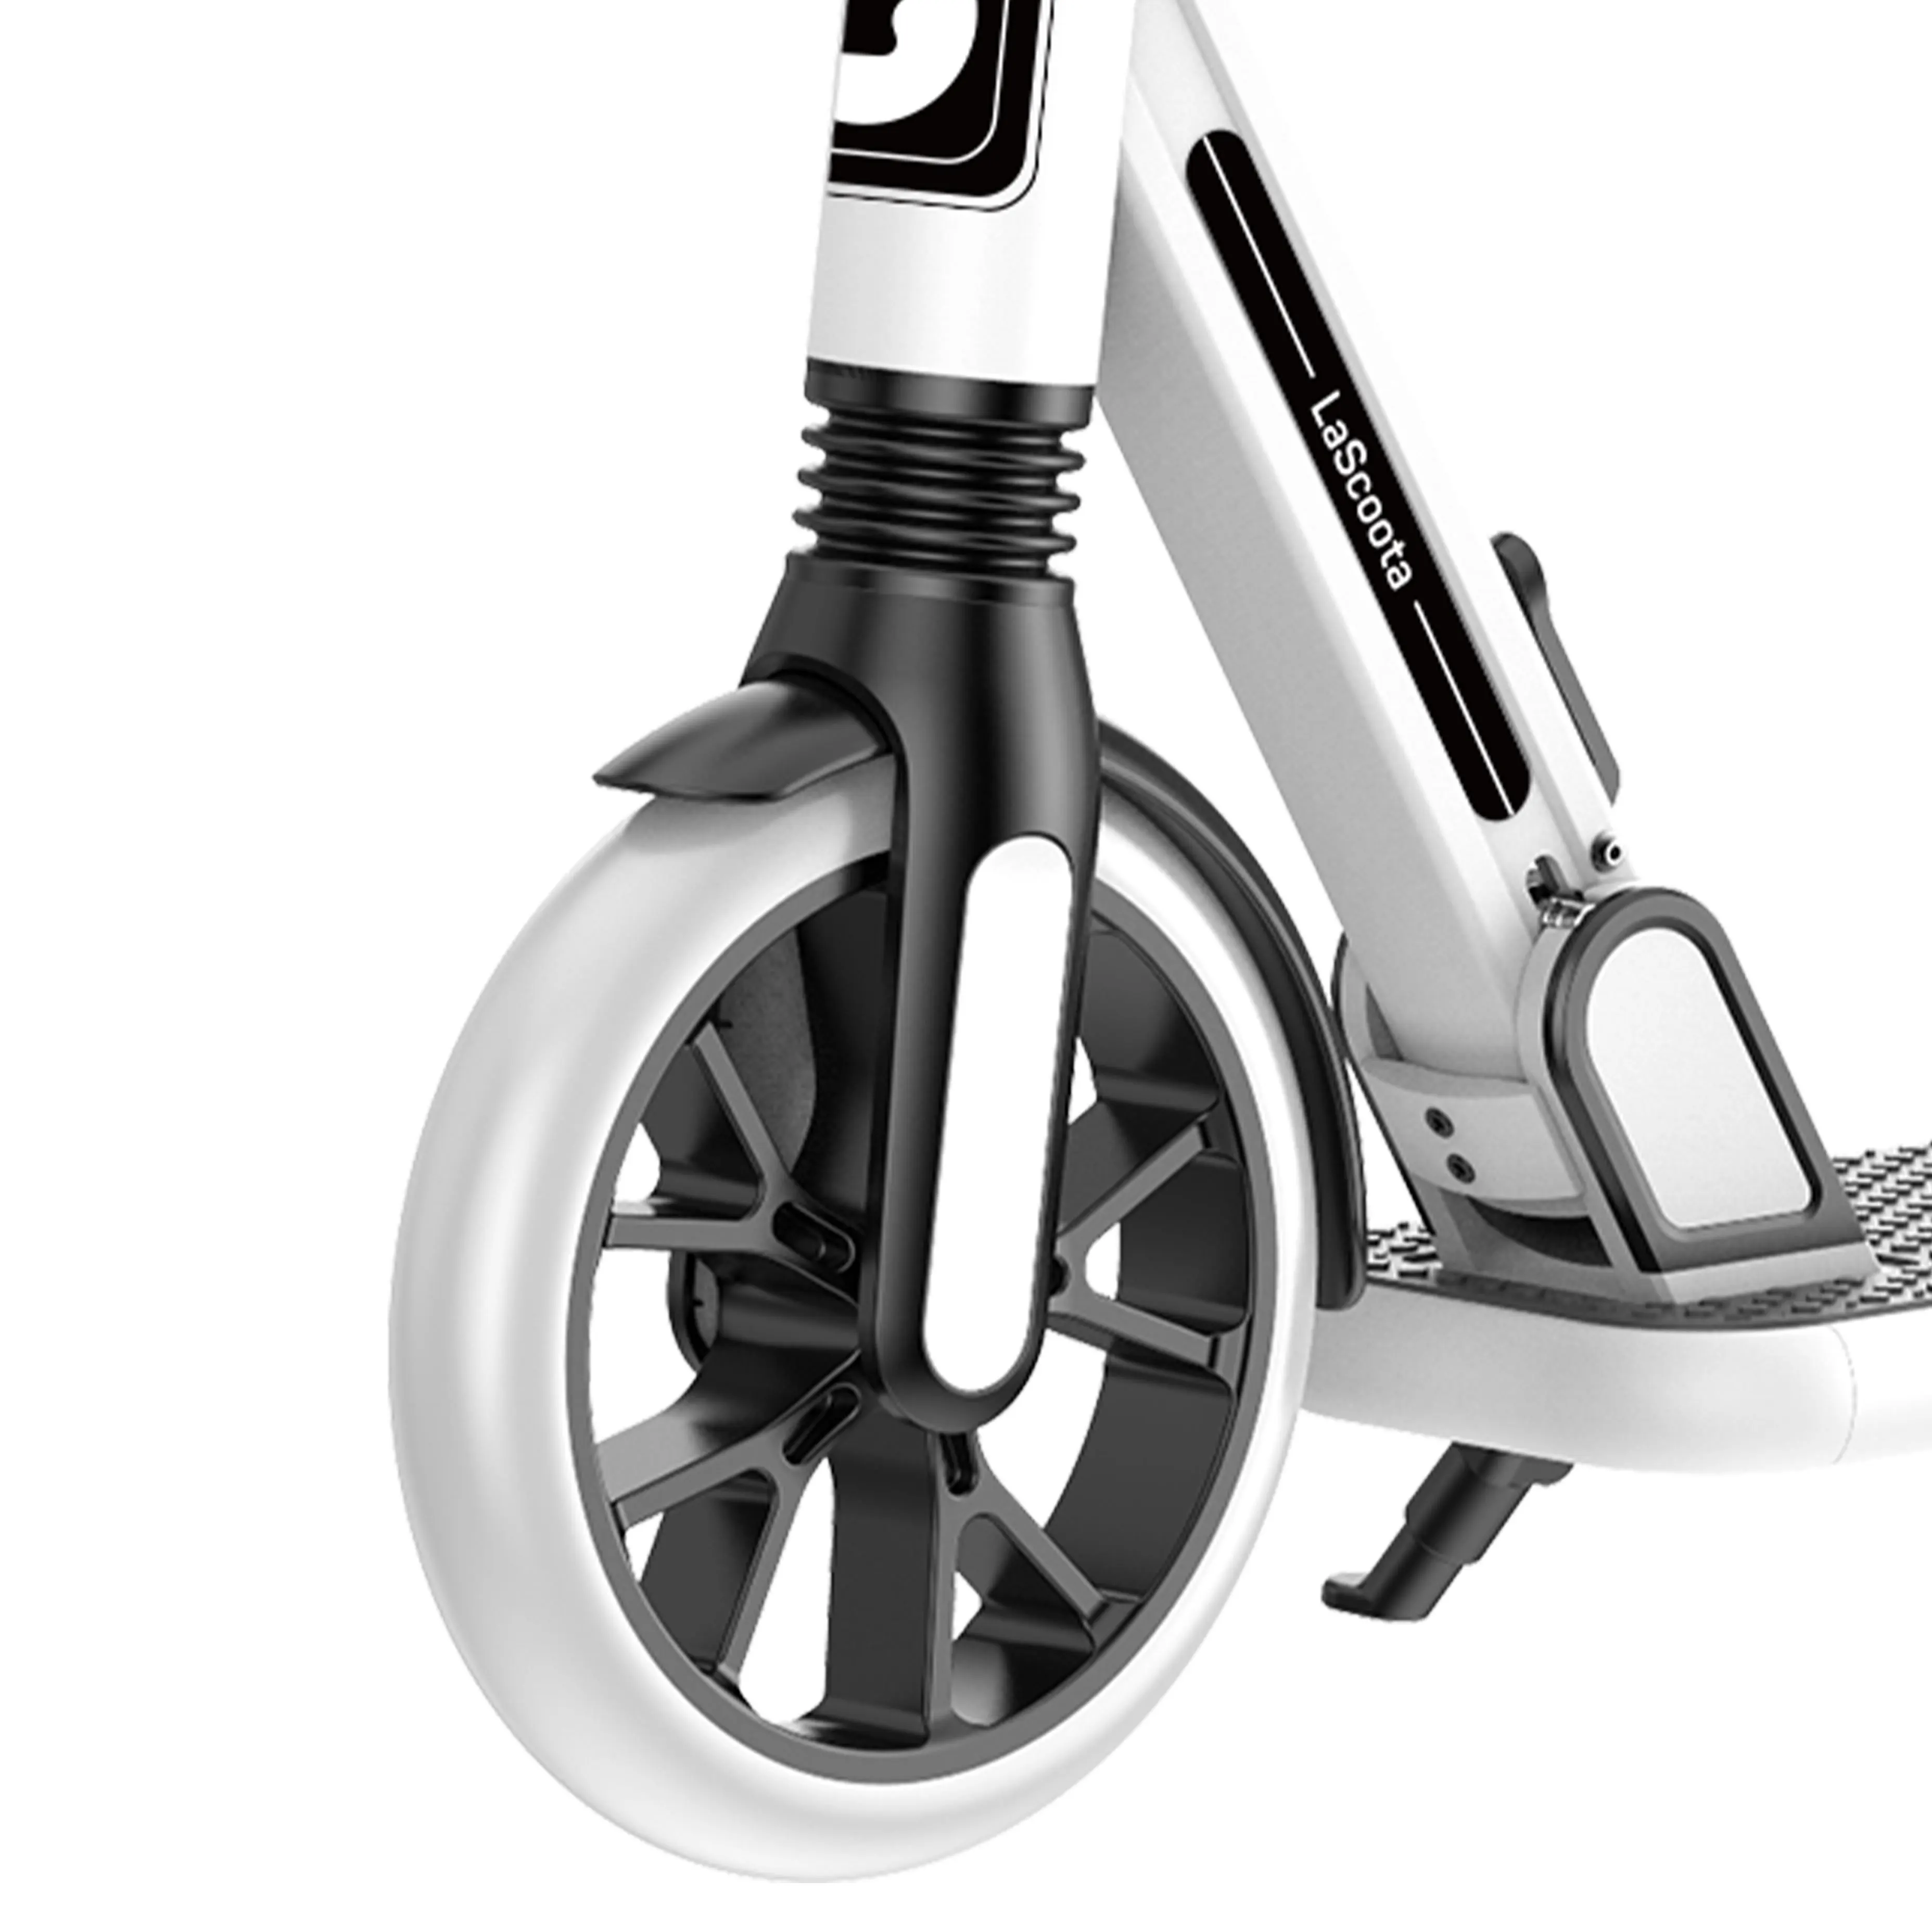 2022 new desgin high quality scooter big wheel kick scooters for adults big wheels adult big wheel scooters